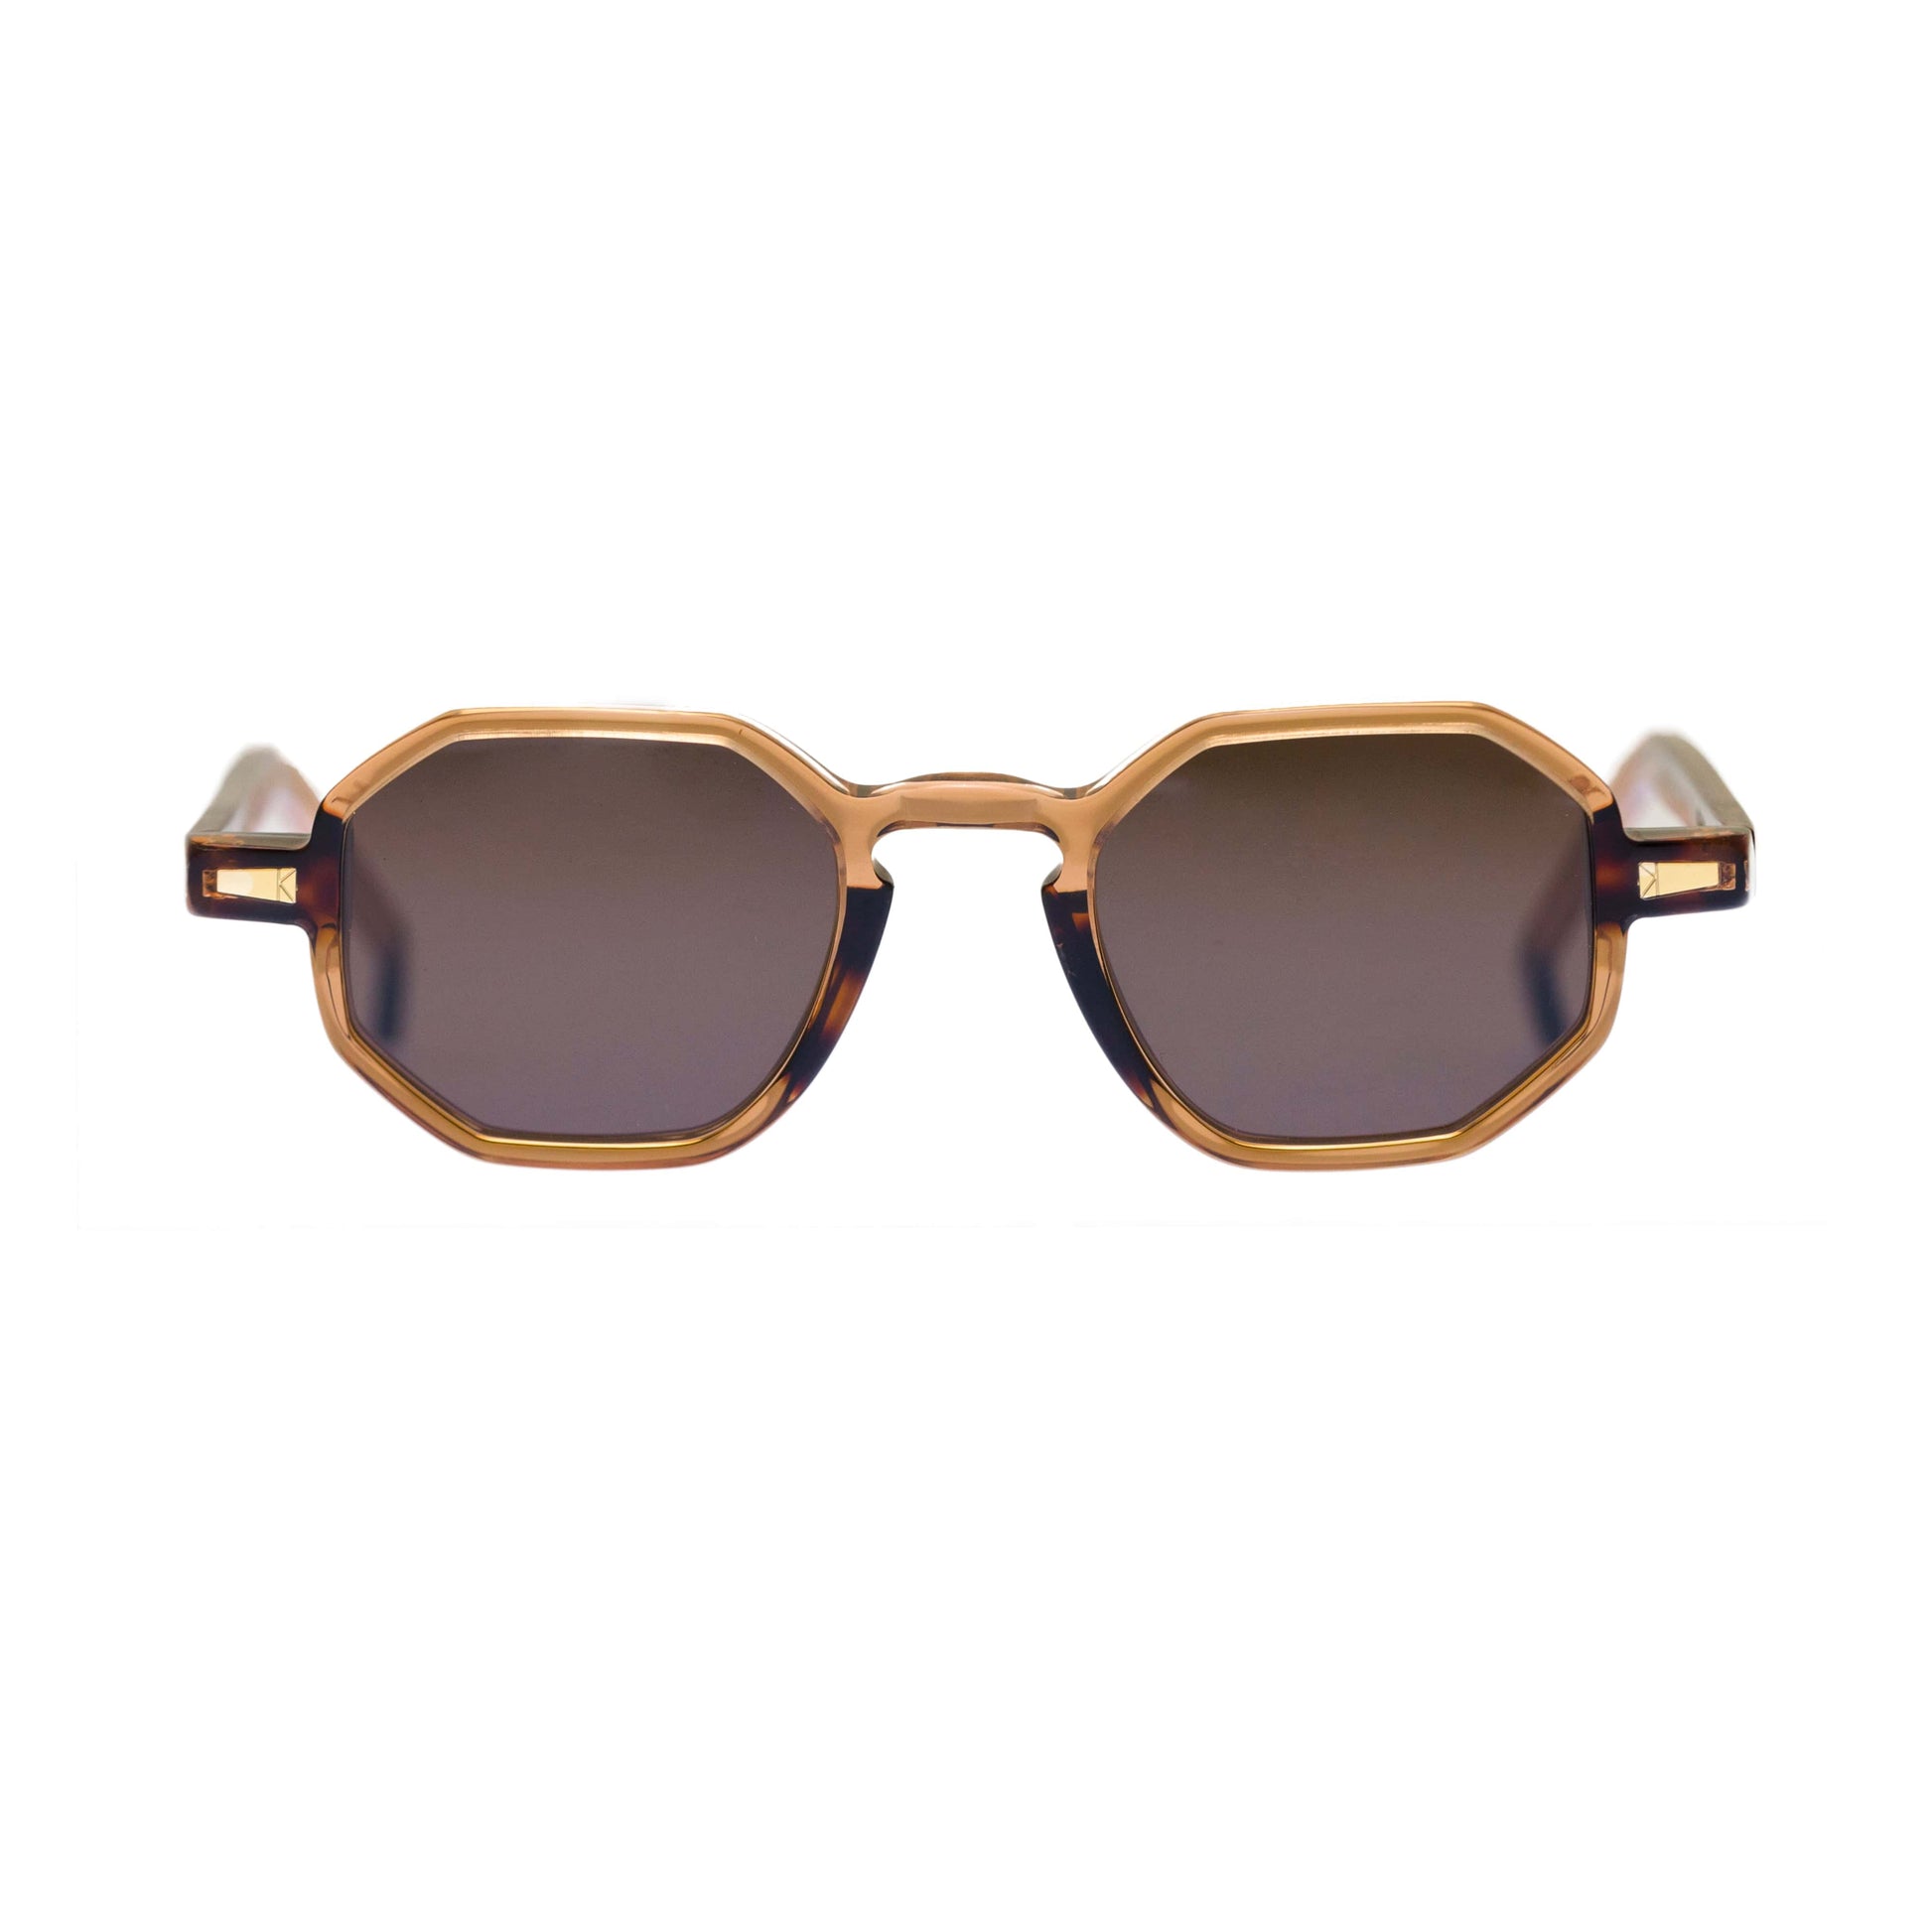 Kyme Occhiali da sole Sabbia trasparente - lente marrone Kyme Rio: occhiale da sole poligonale made in Italy